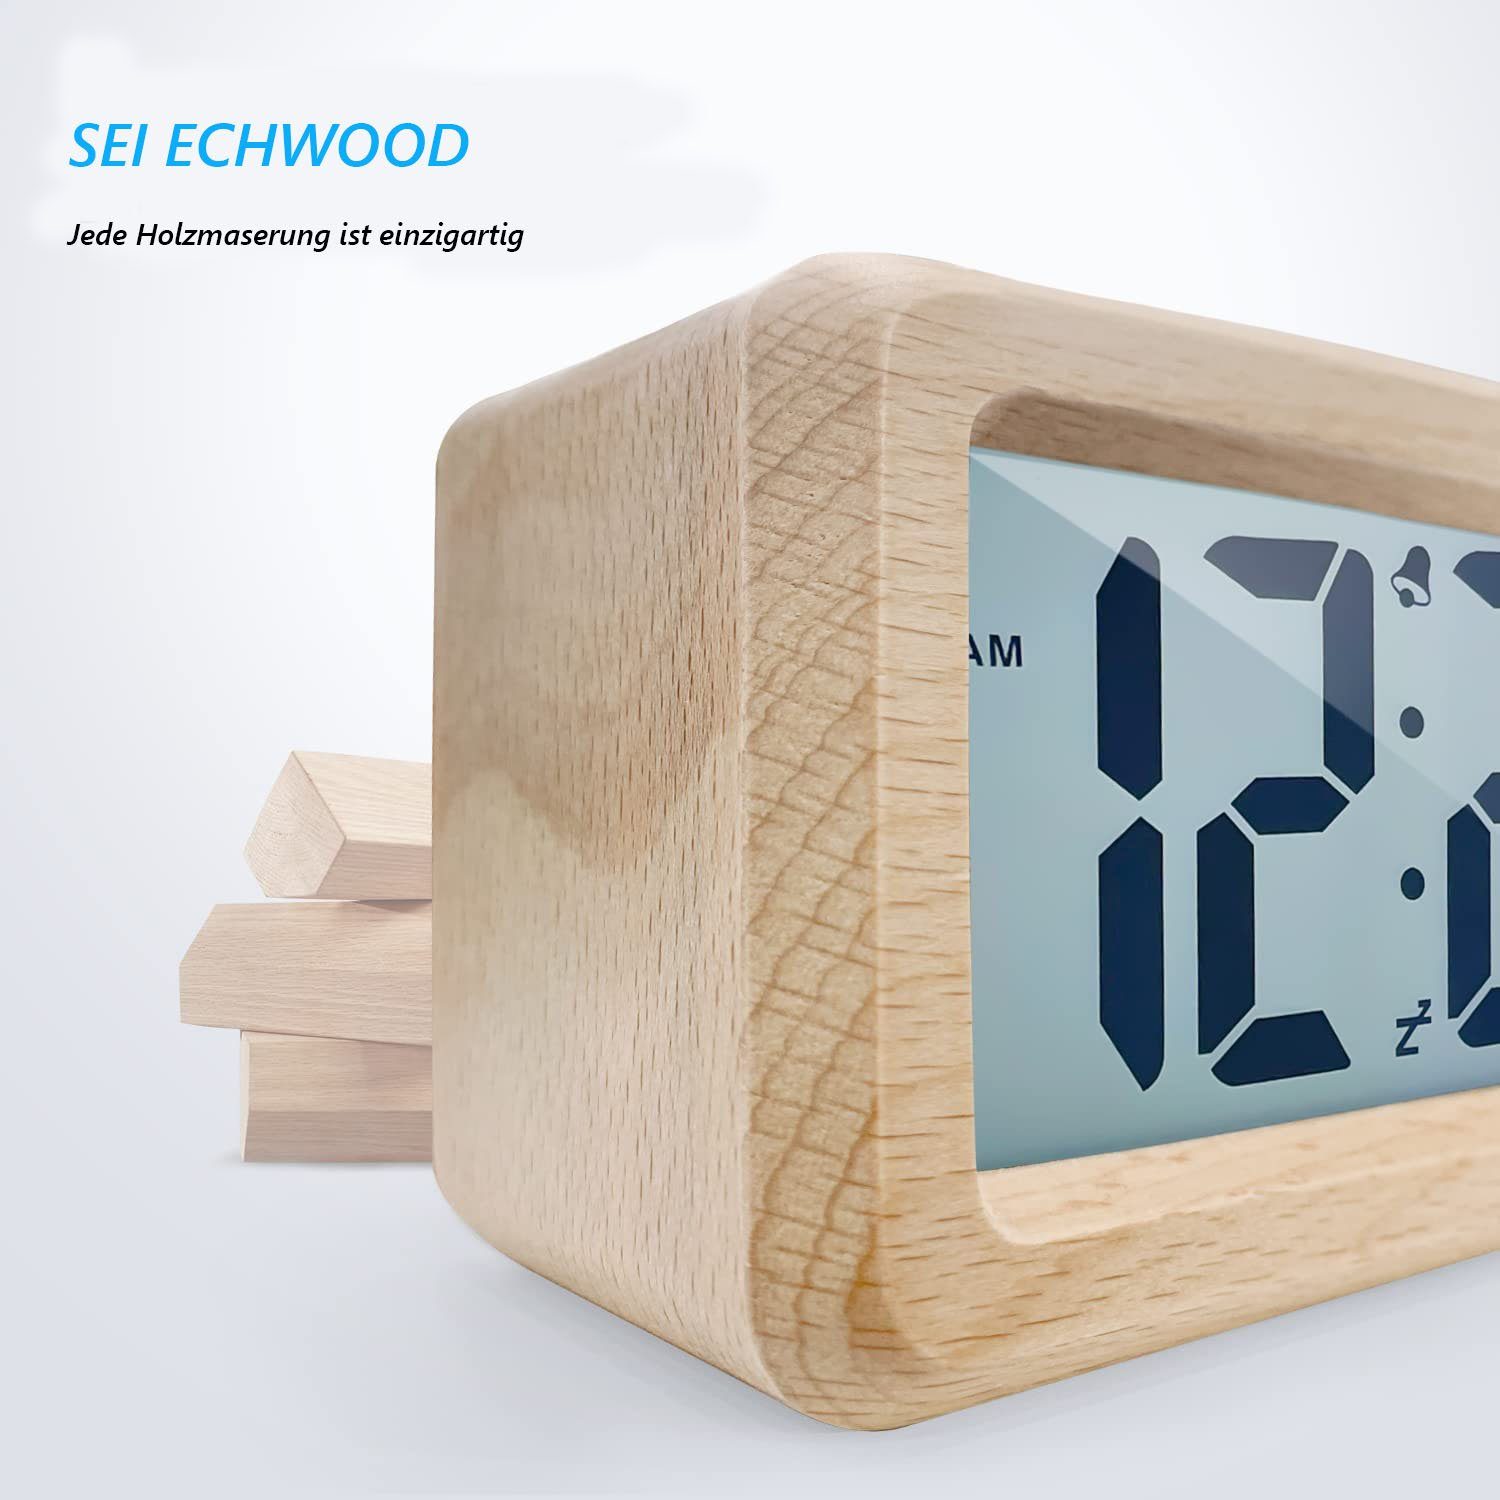 Holz LED Digital Wecker Tischuhr Uhr Thermometer Kalender Alarm Soundsteuerung 